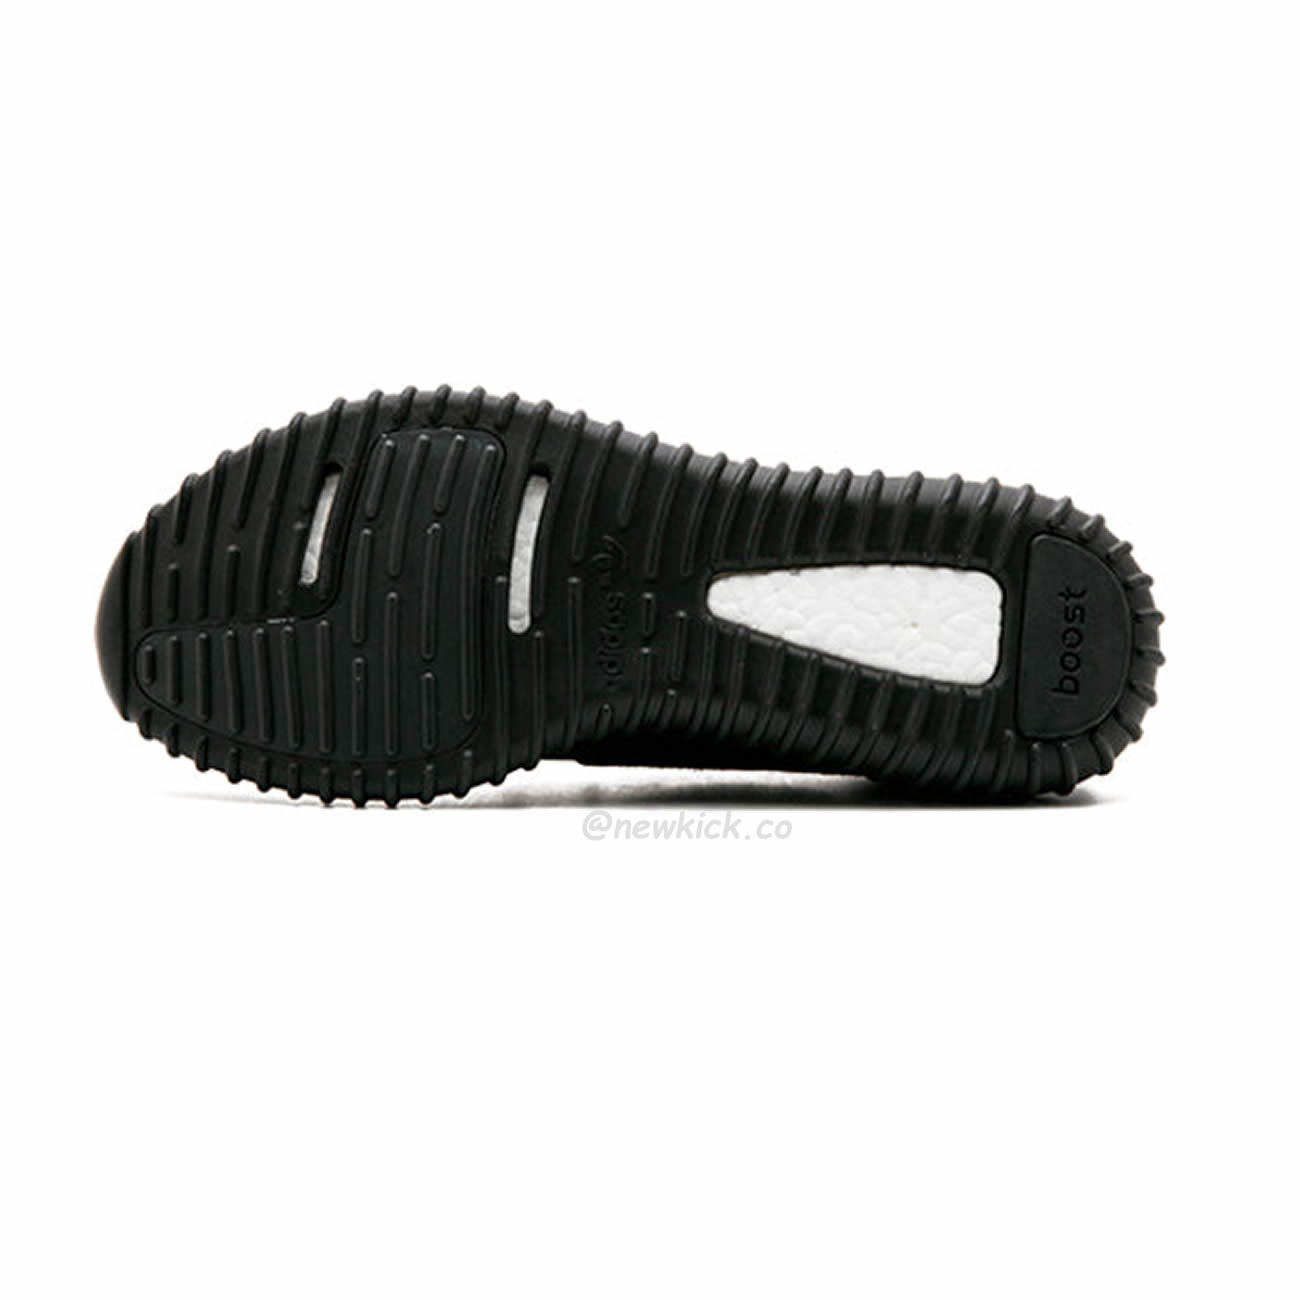 Adidas Yeezy Boost 350 Pirate Black Aq2659 (12) - www.newkick.org